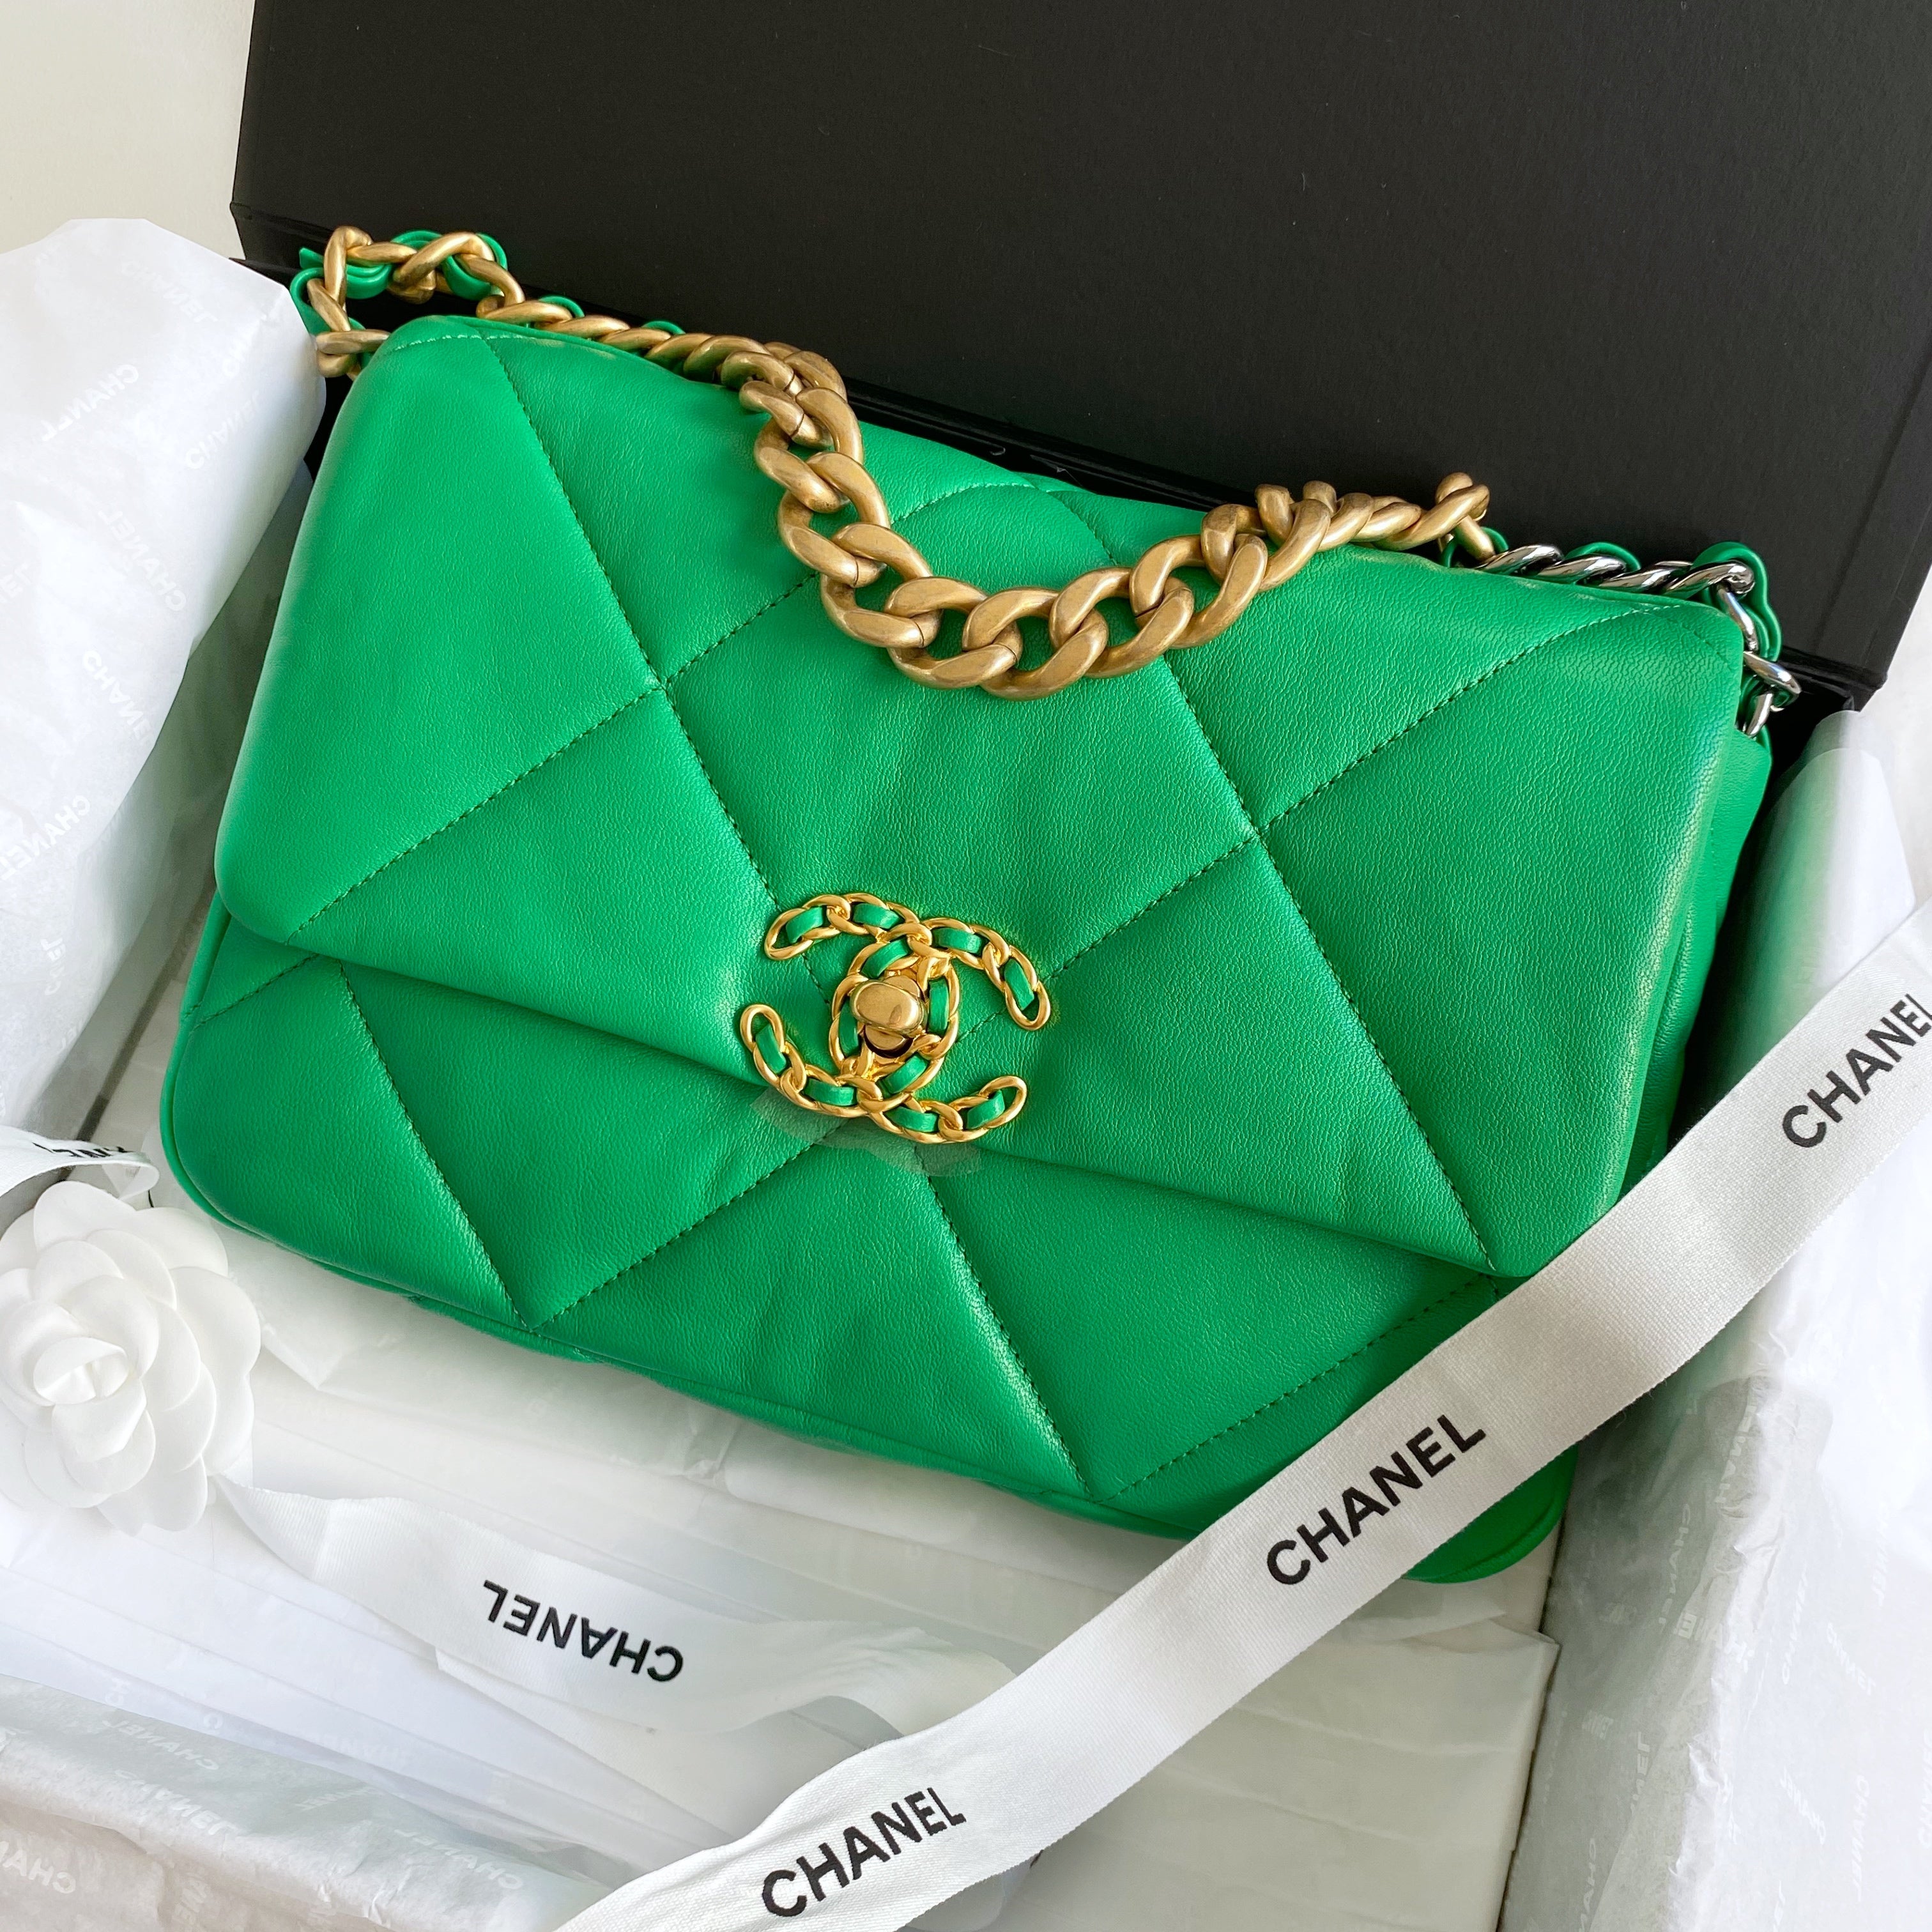 Chanel 19 in green NEW!! Please DM - Luxe luxury labels